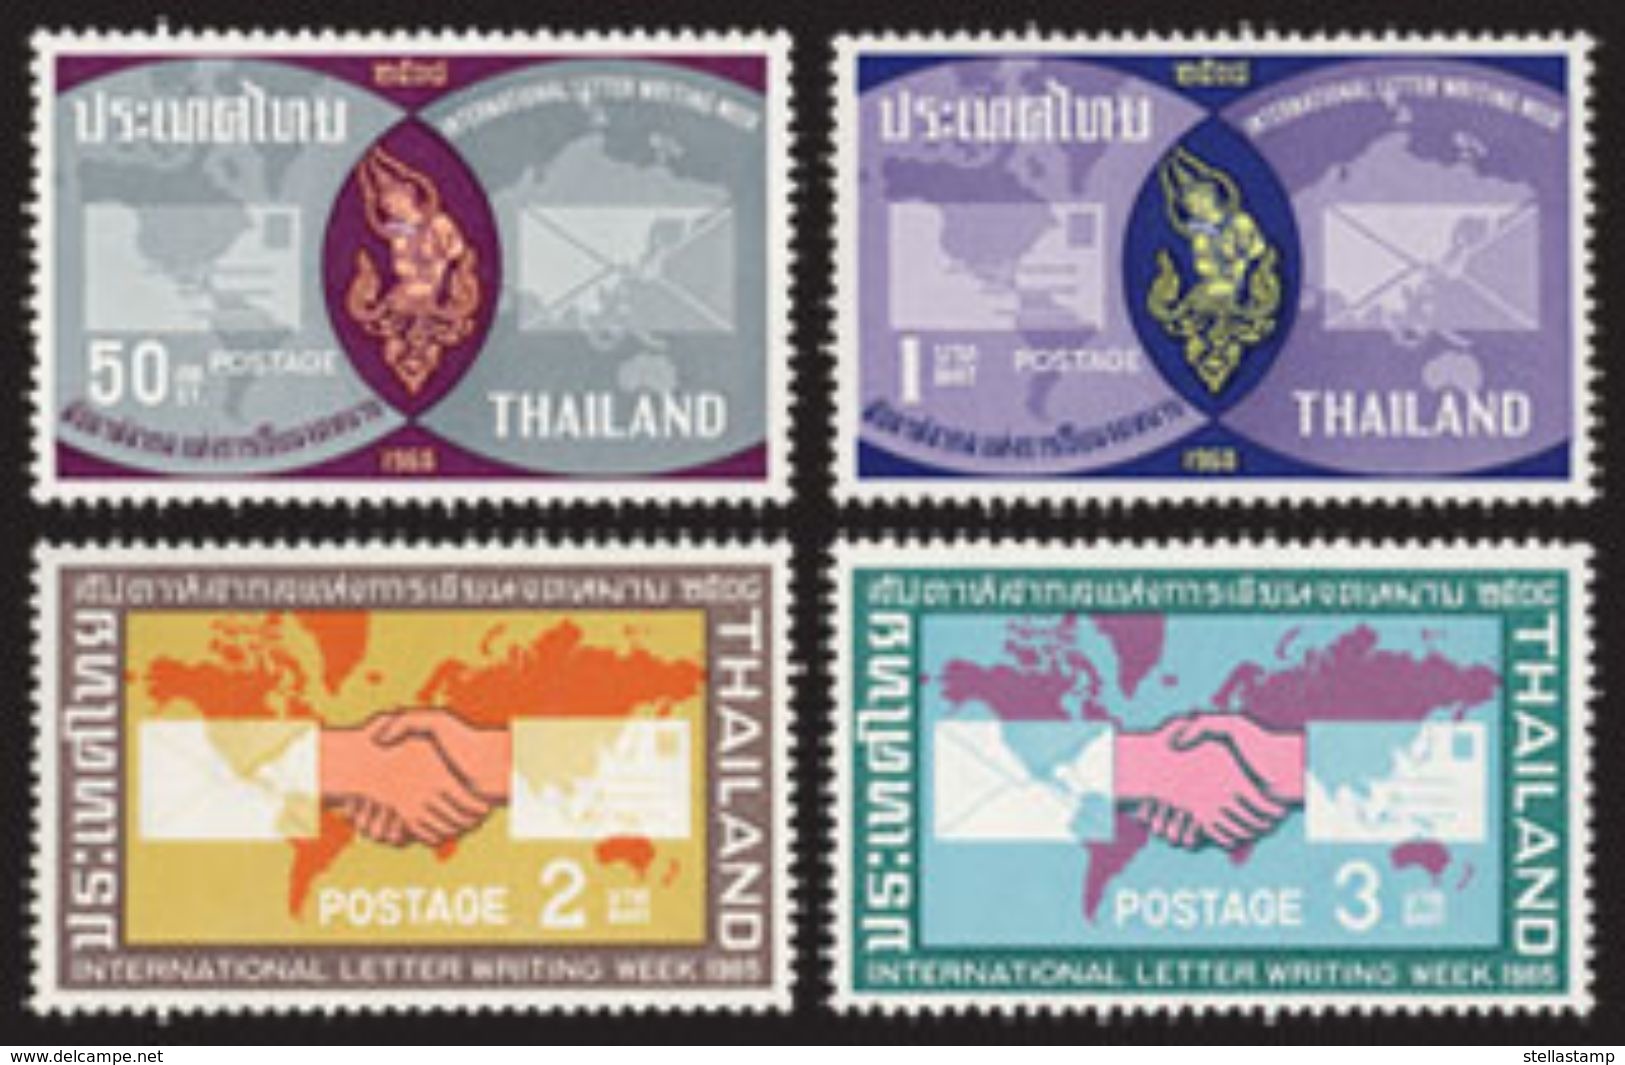 Thailand Stamp 1965 International Letter Writing Week - Thailand